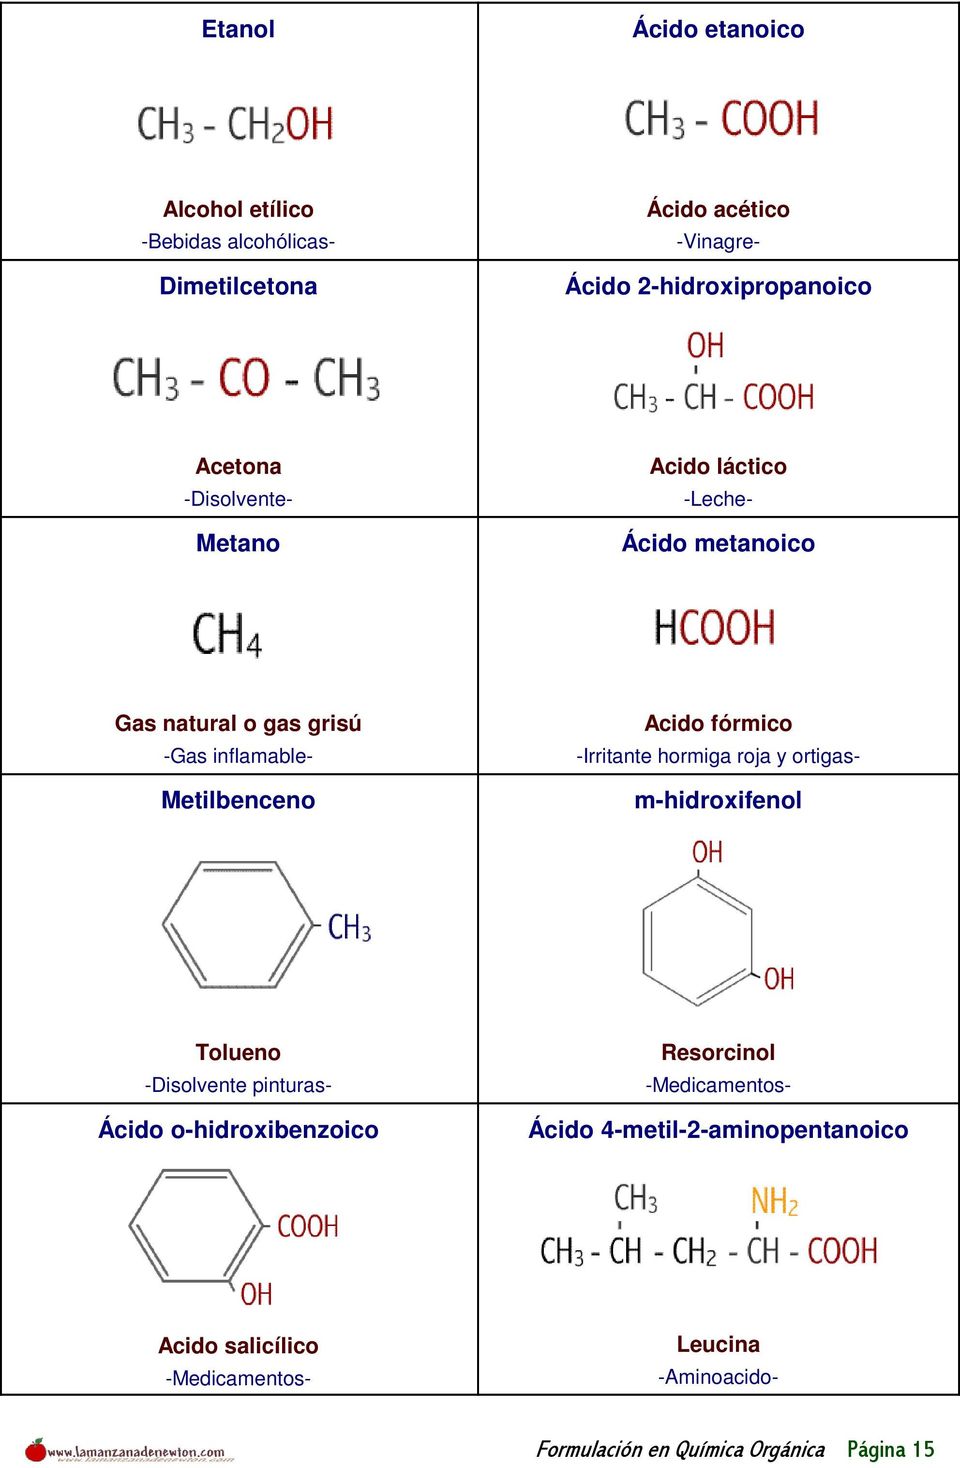 Acido fórmico -Irritante hormiga roja y ortigas- Tolueno Ácido o-hidroxibenzoico Resorcinol Ácido 4-metil-2-aminopentanoico